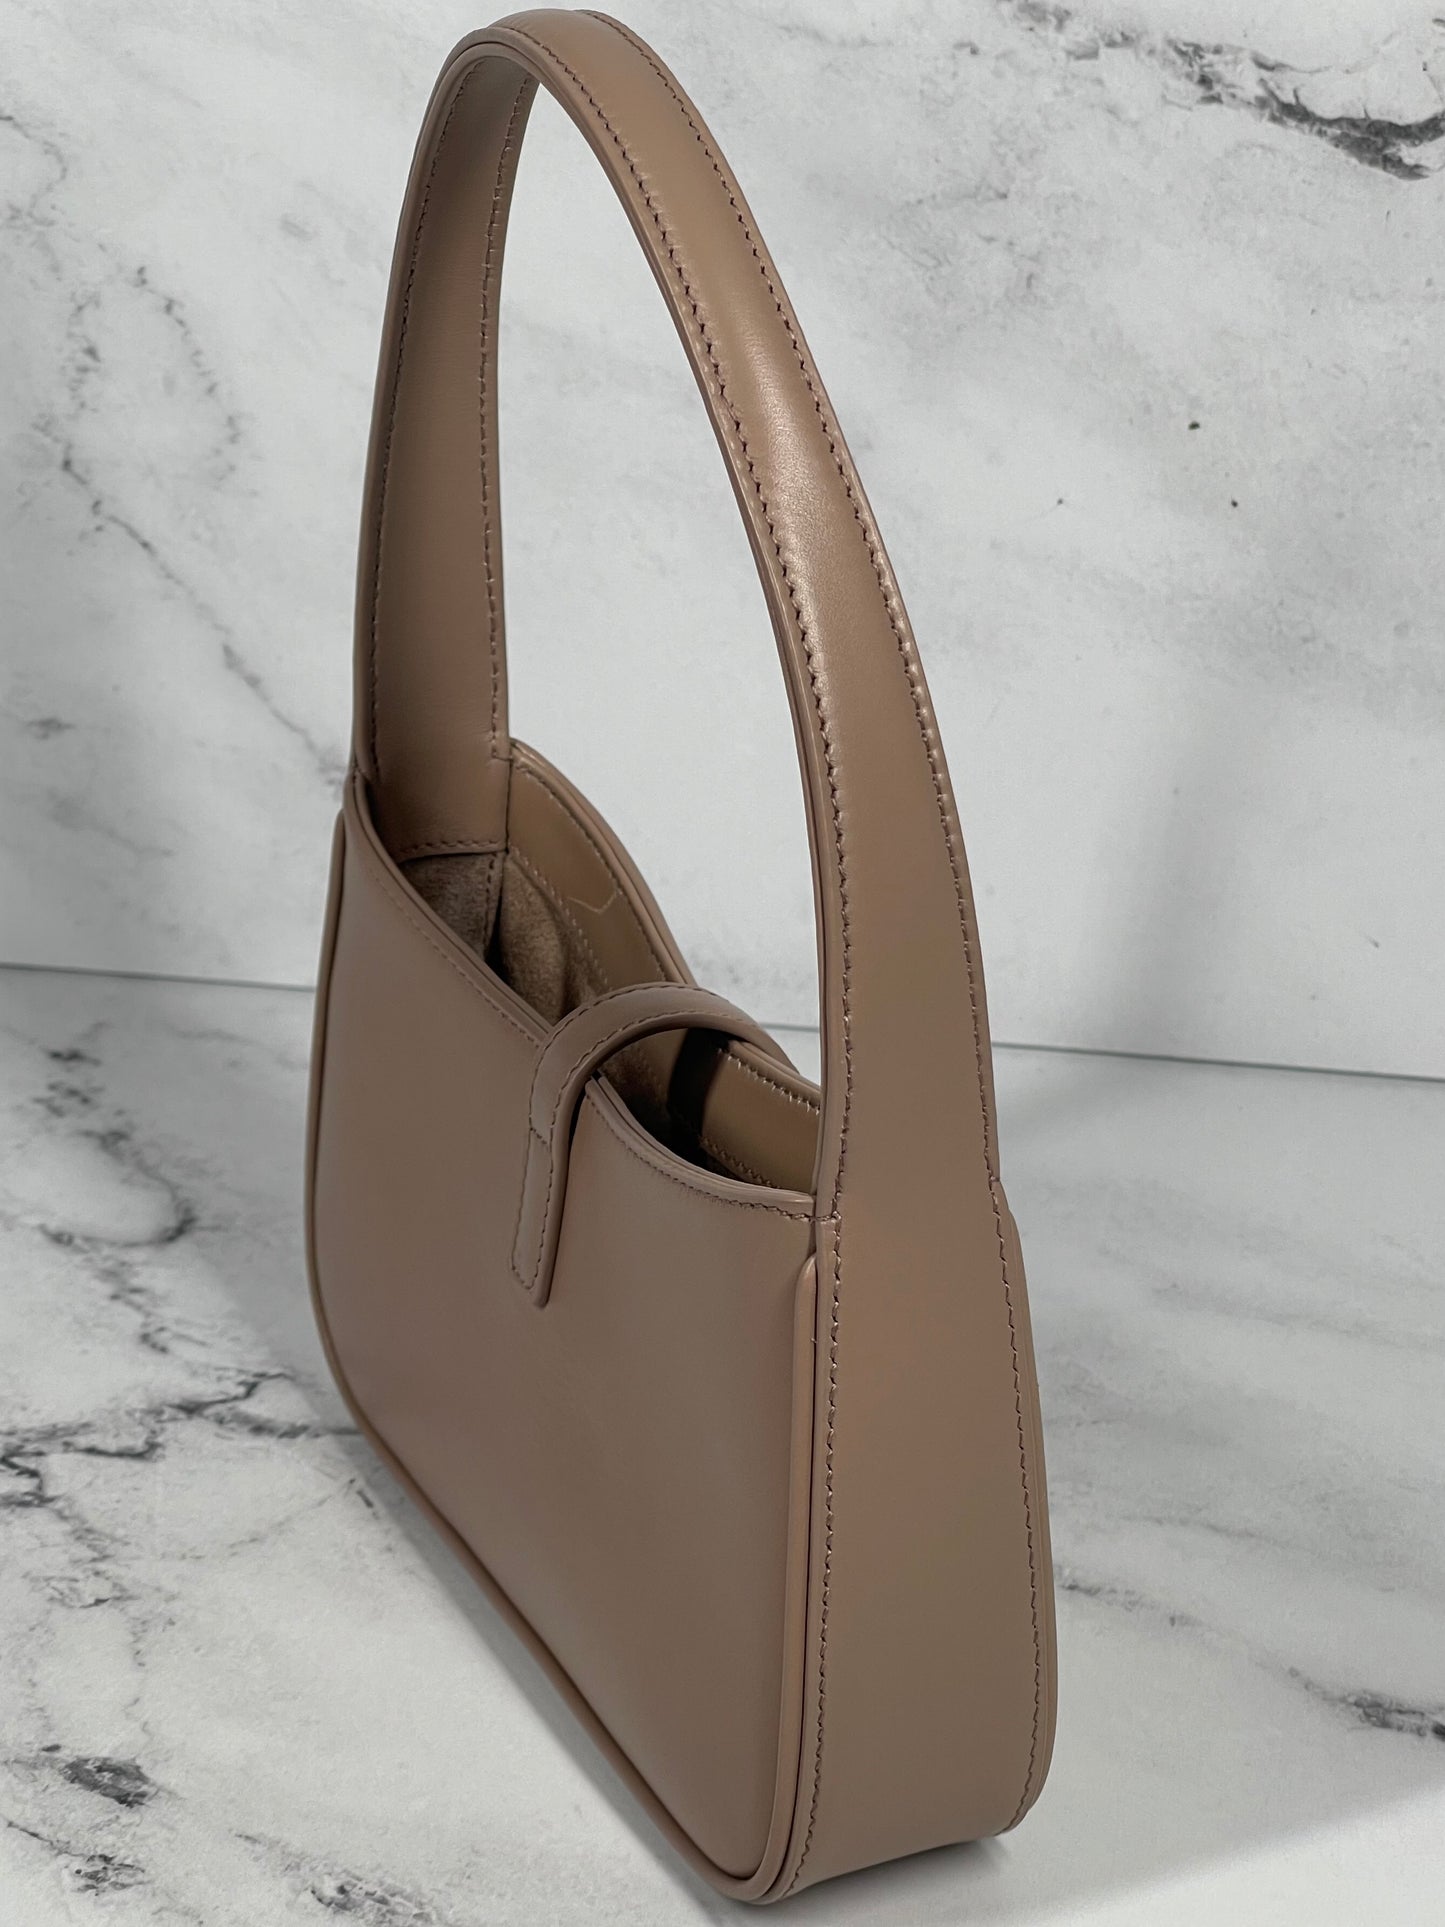 YSL Yves Saint Laurent Smooth Calfskin Le 5 A 7 Mini Hobo Shoulder Bag in Rosy Sand